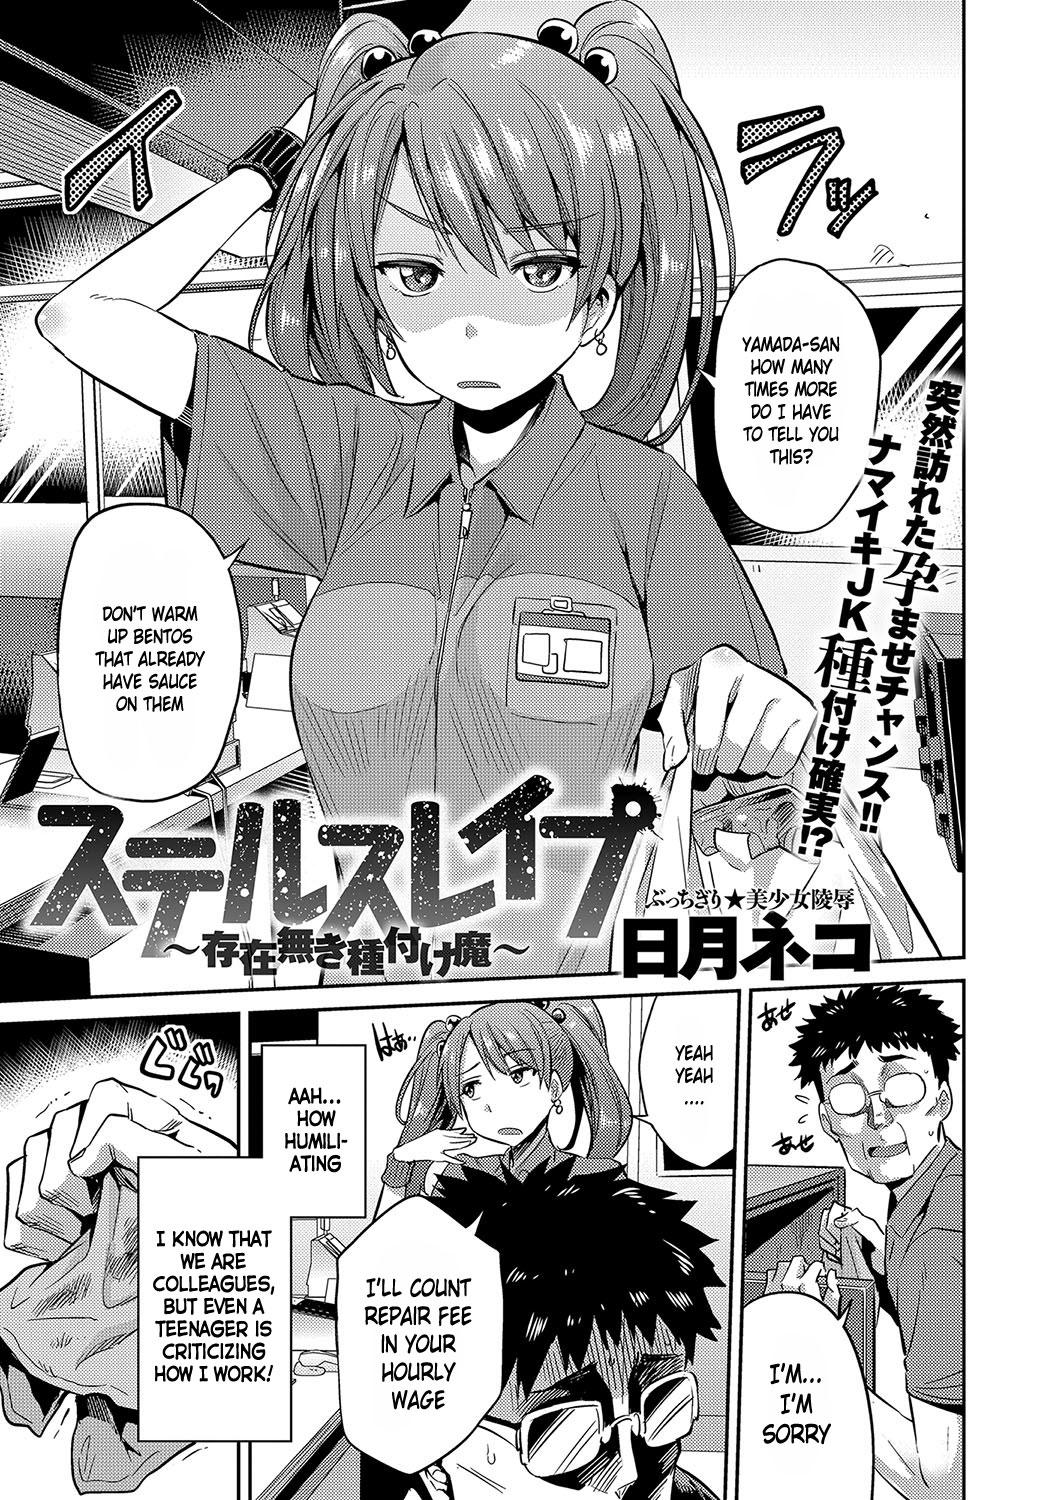 Uncensored henrai manga